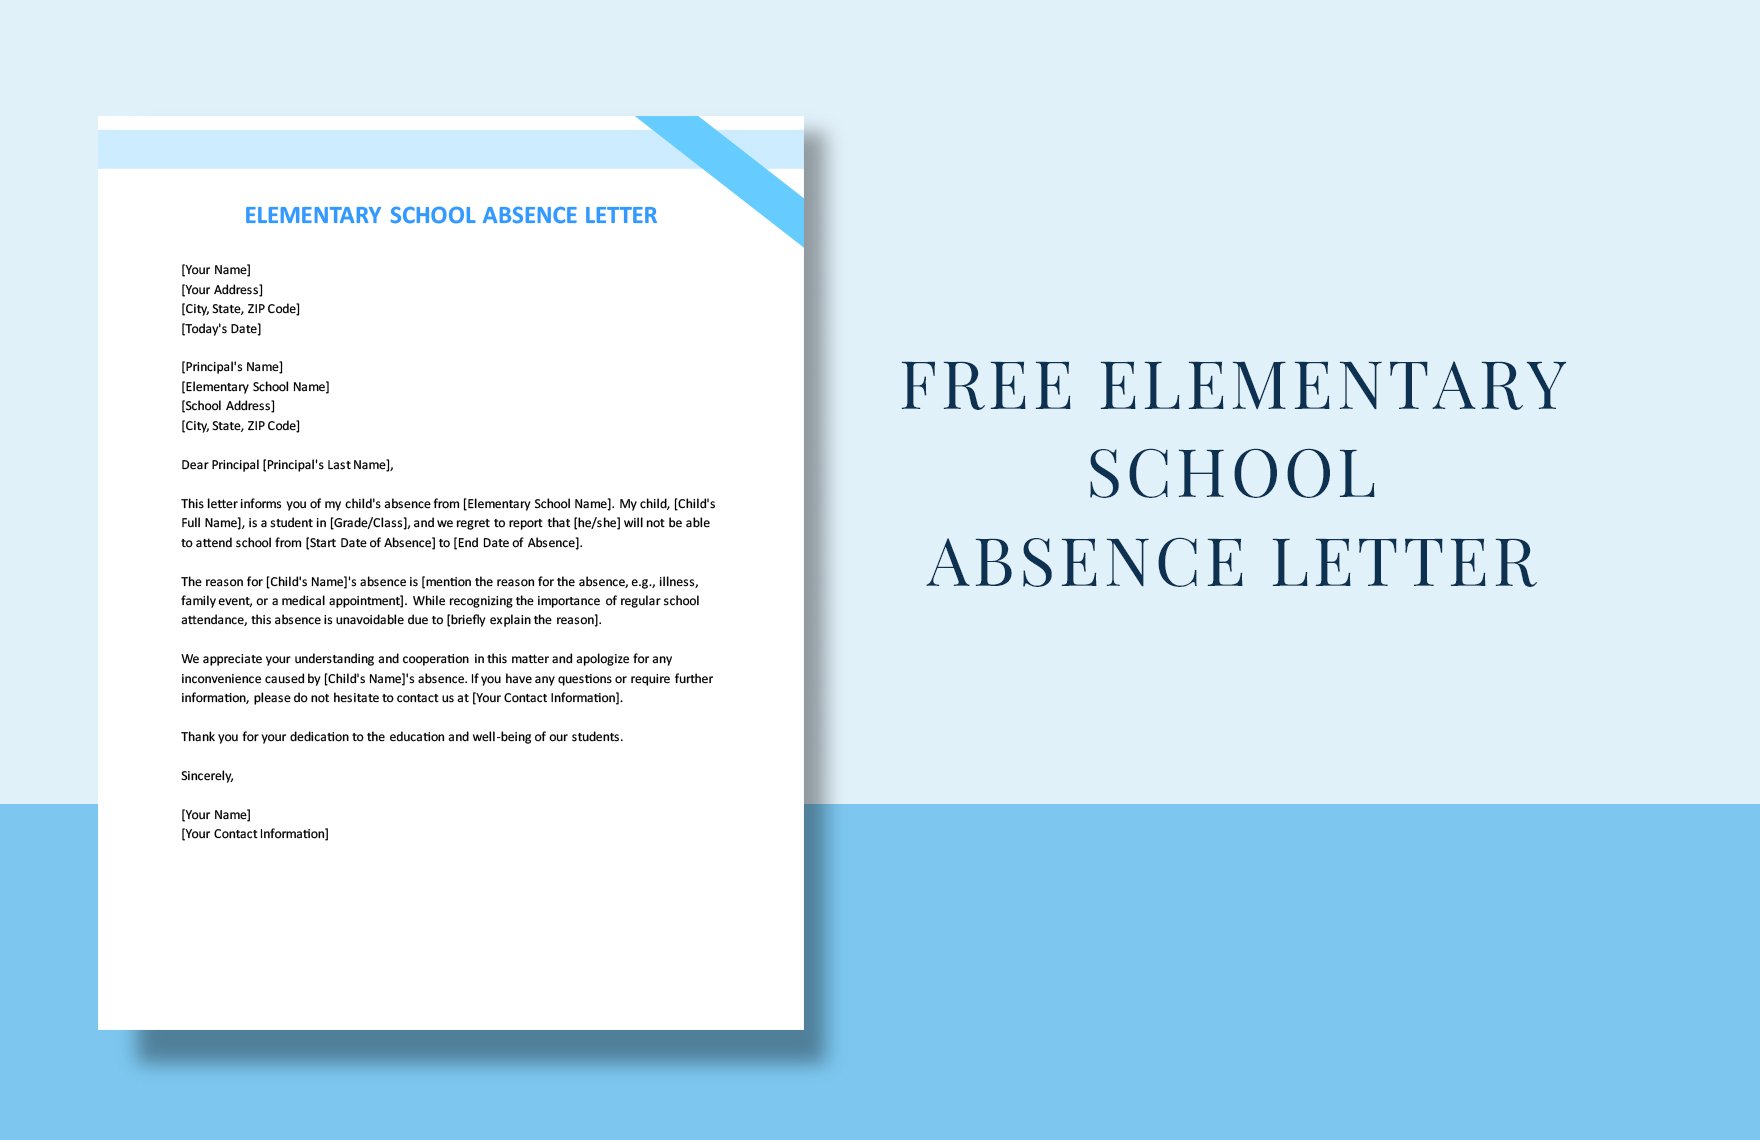 Elementary School Absence Letter